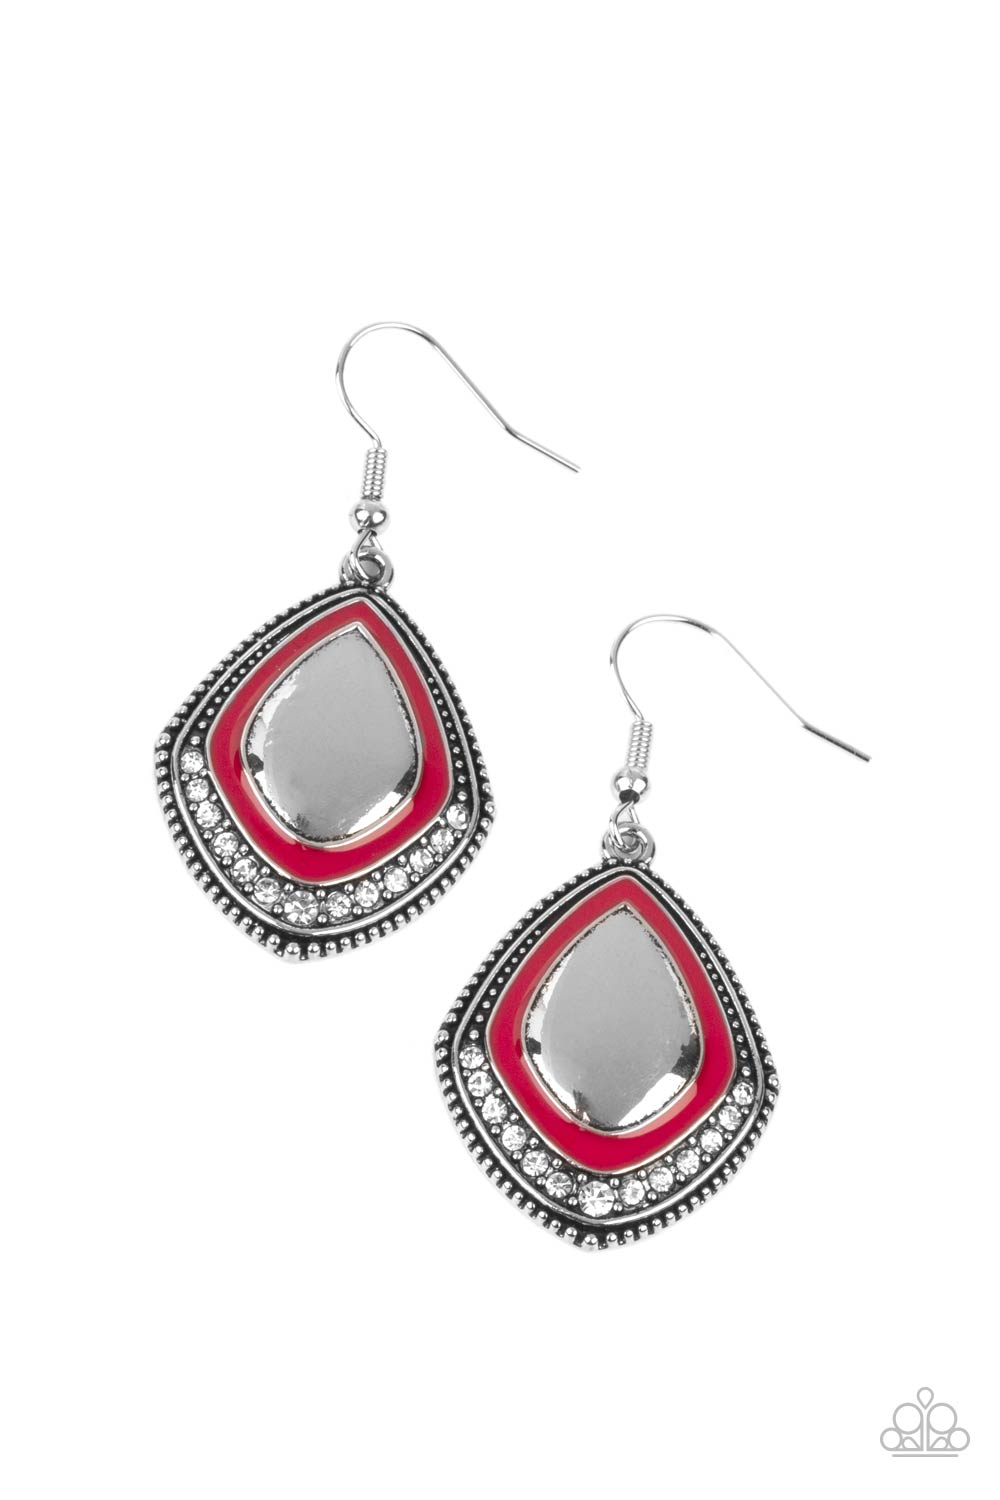 Red/White Checkered Earrings – Mamili